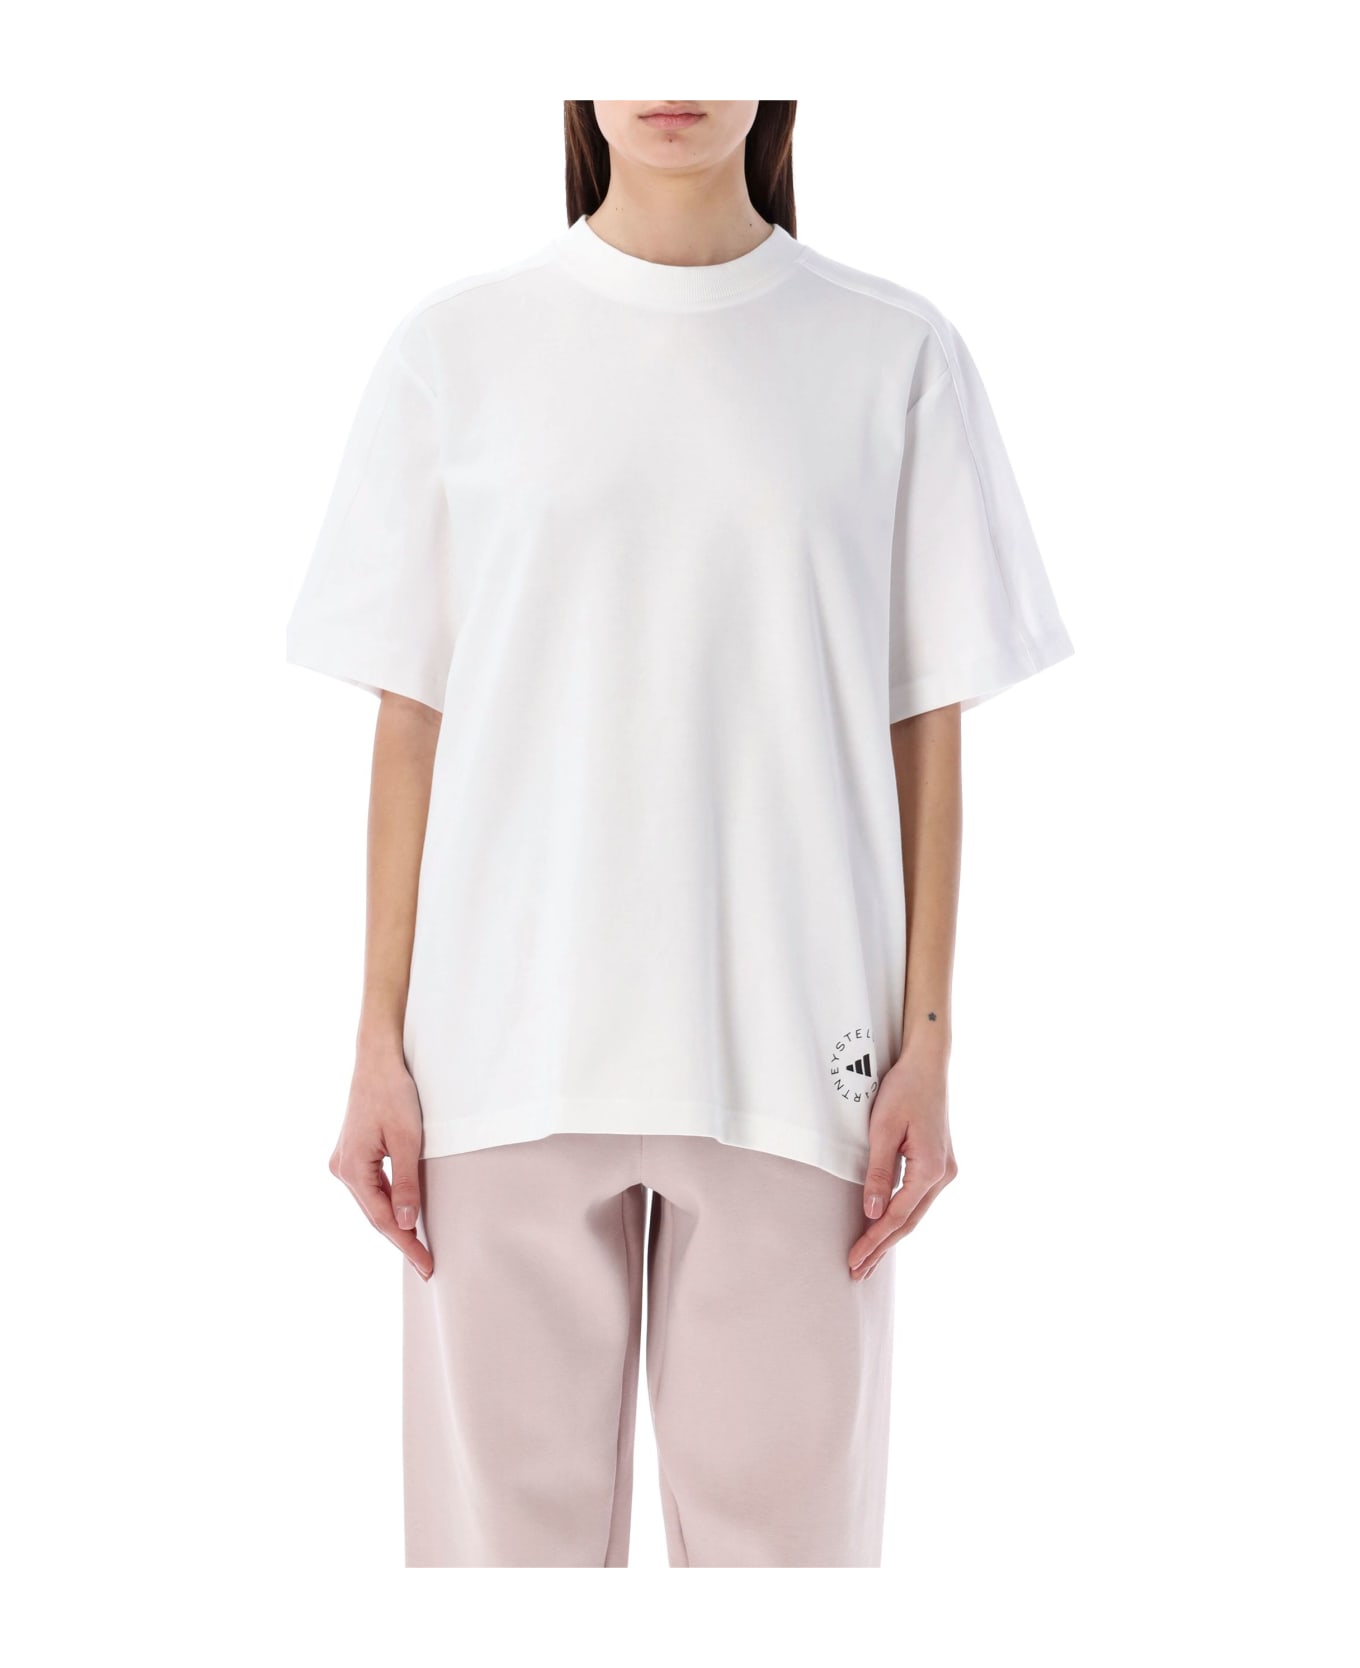 Adidas by Stella McCartney Truecasuals Logo T-shirt - WHITE